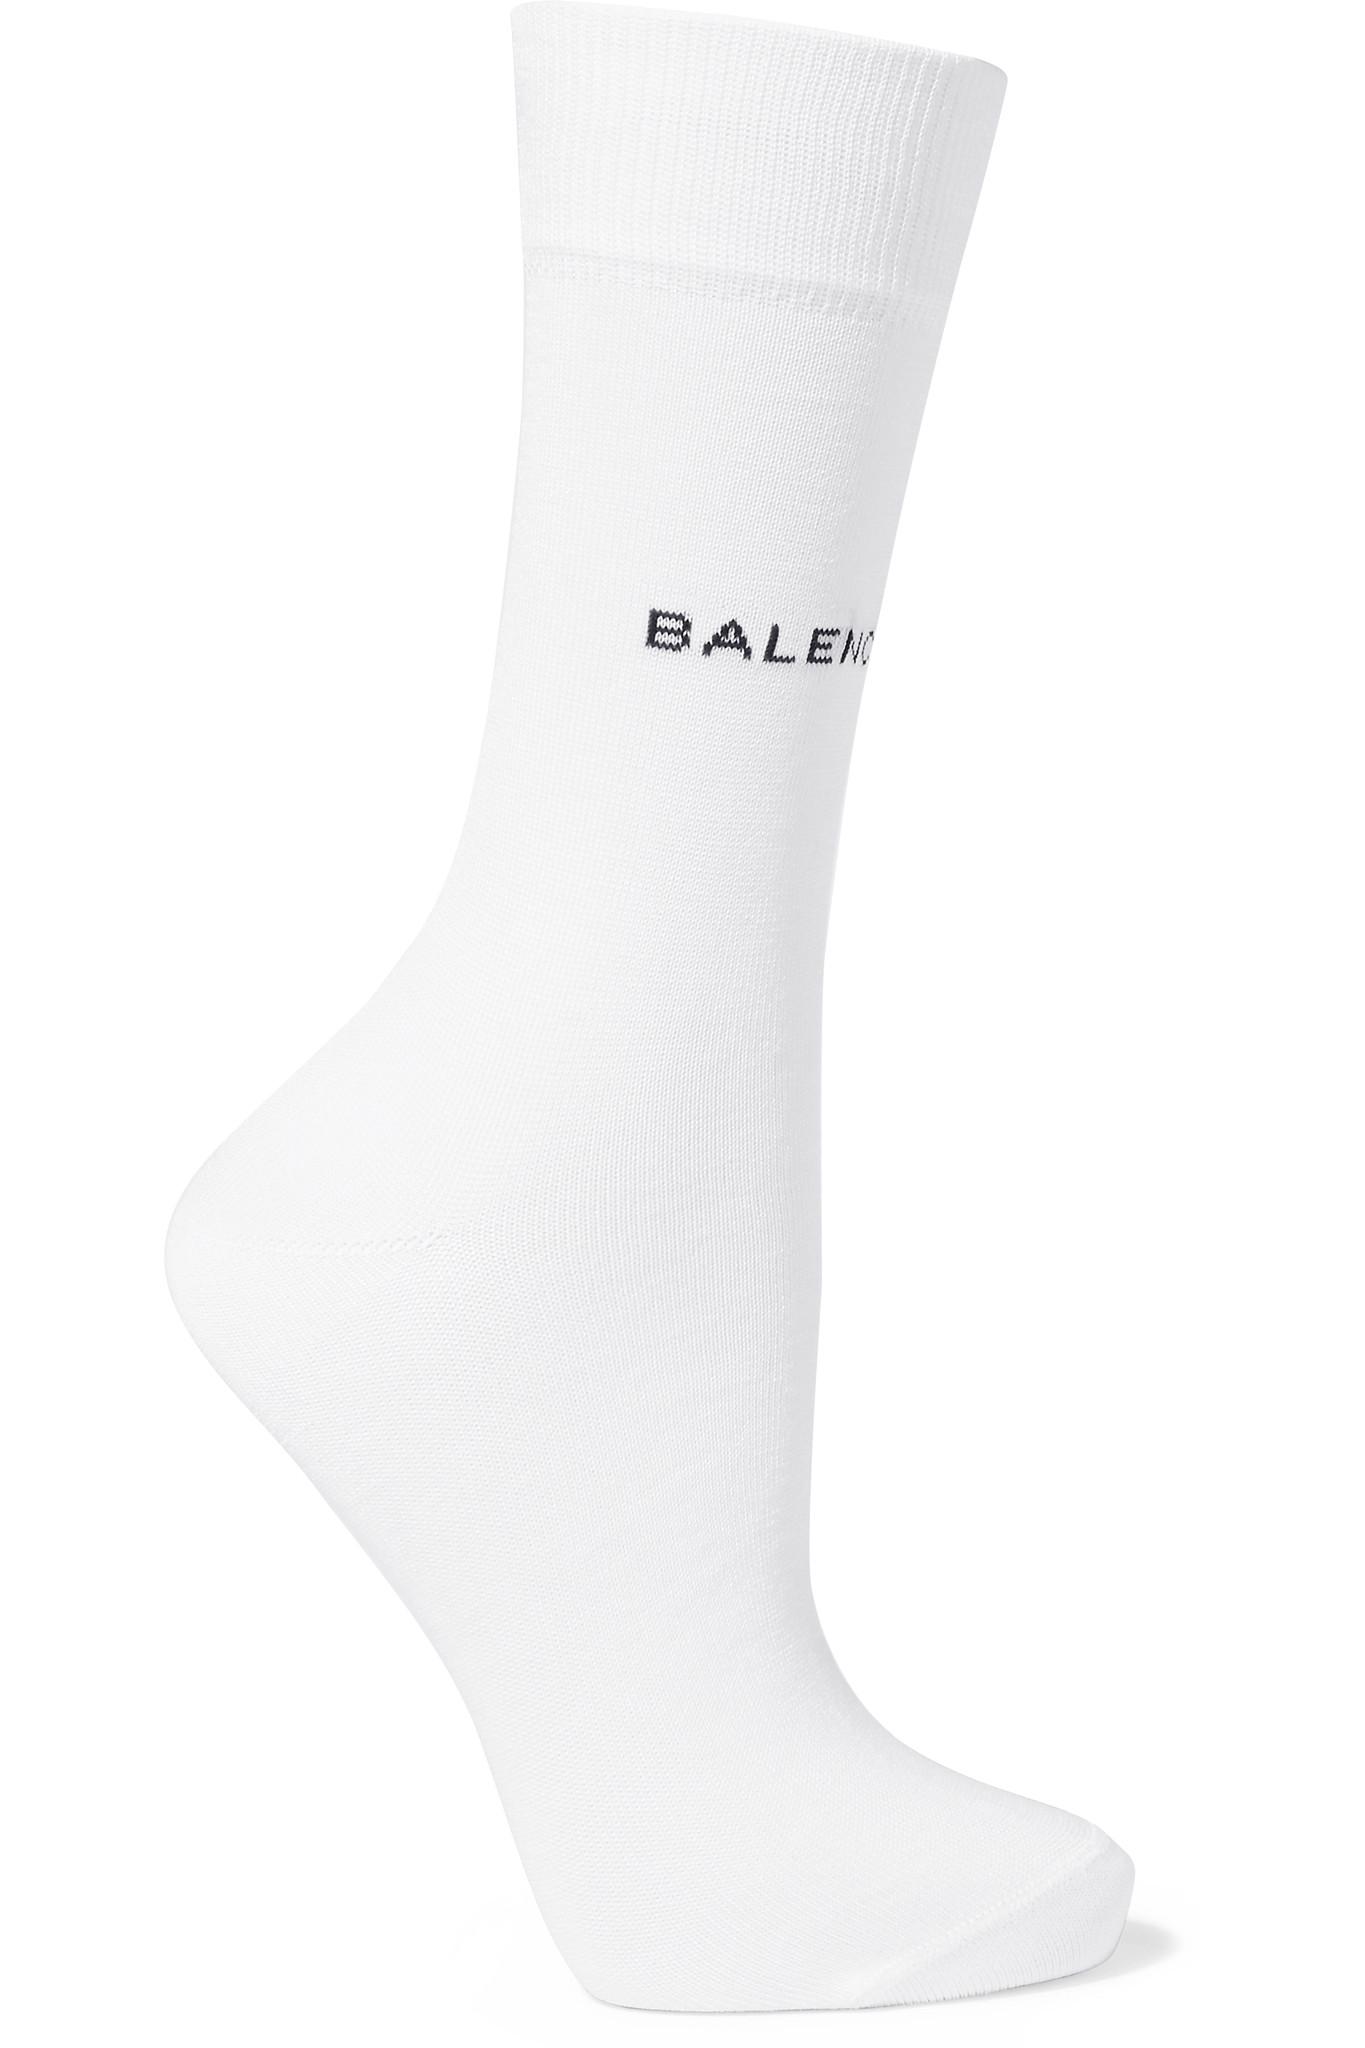 Balenciaga Intarsia Cotton-blend Socks in White - Save 32% | Lyst